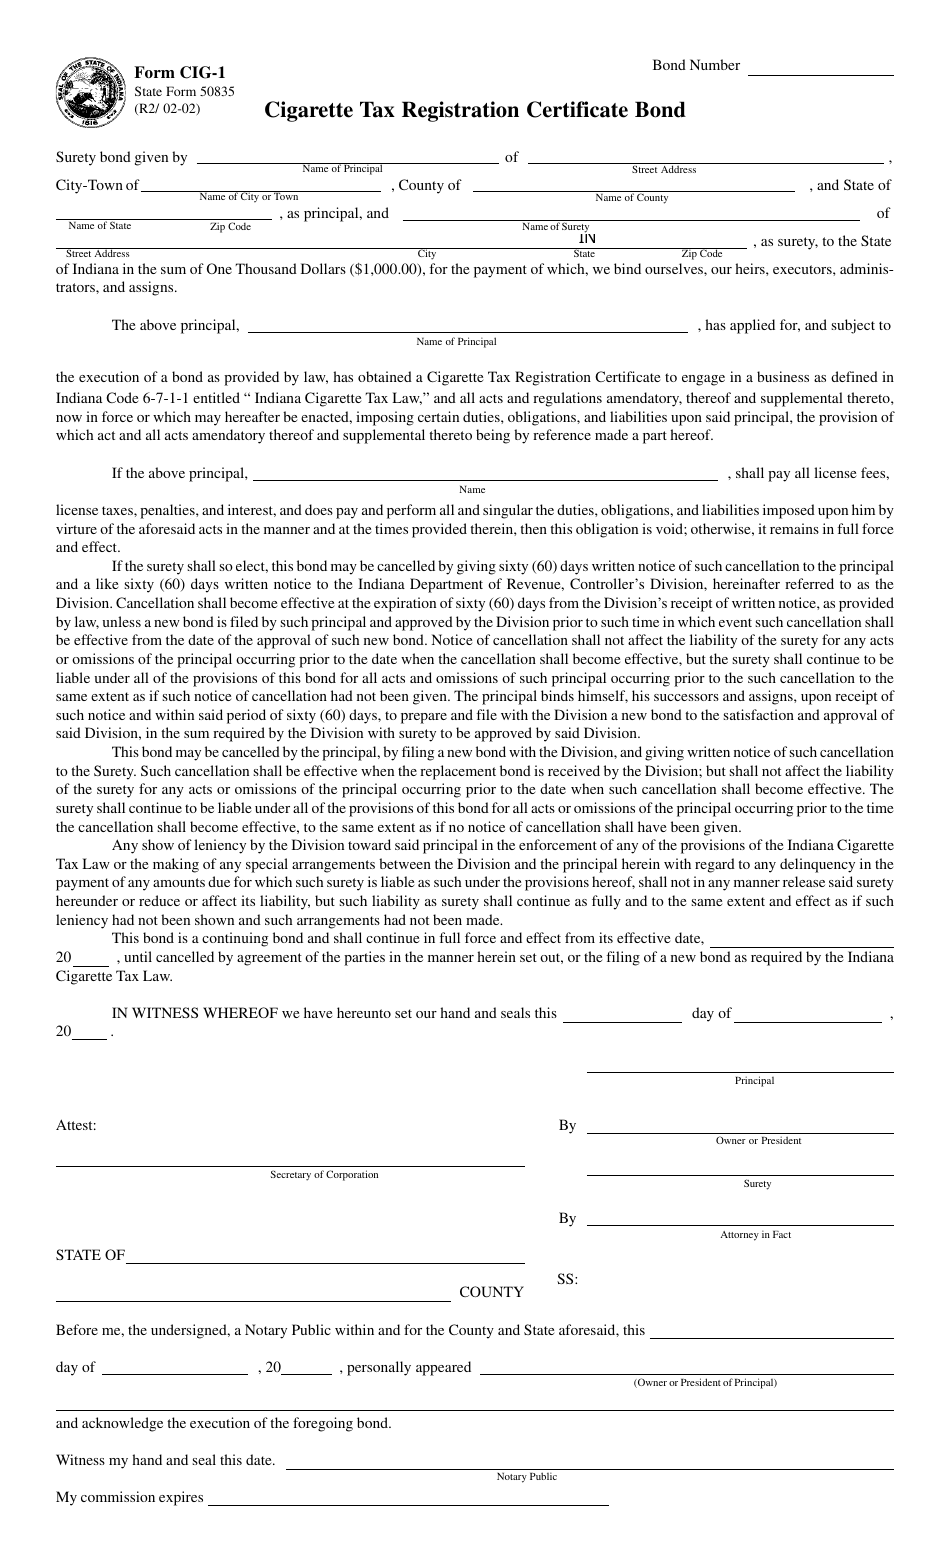 Form CIG-1 (State Form 50835) Cigarette Tax Registration Certificate Bond - Indiana, Page 1